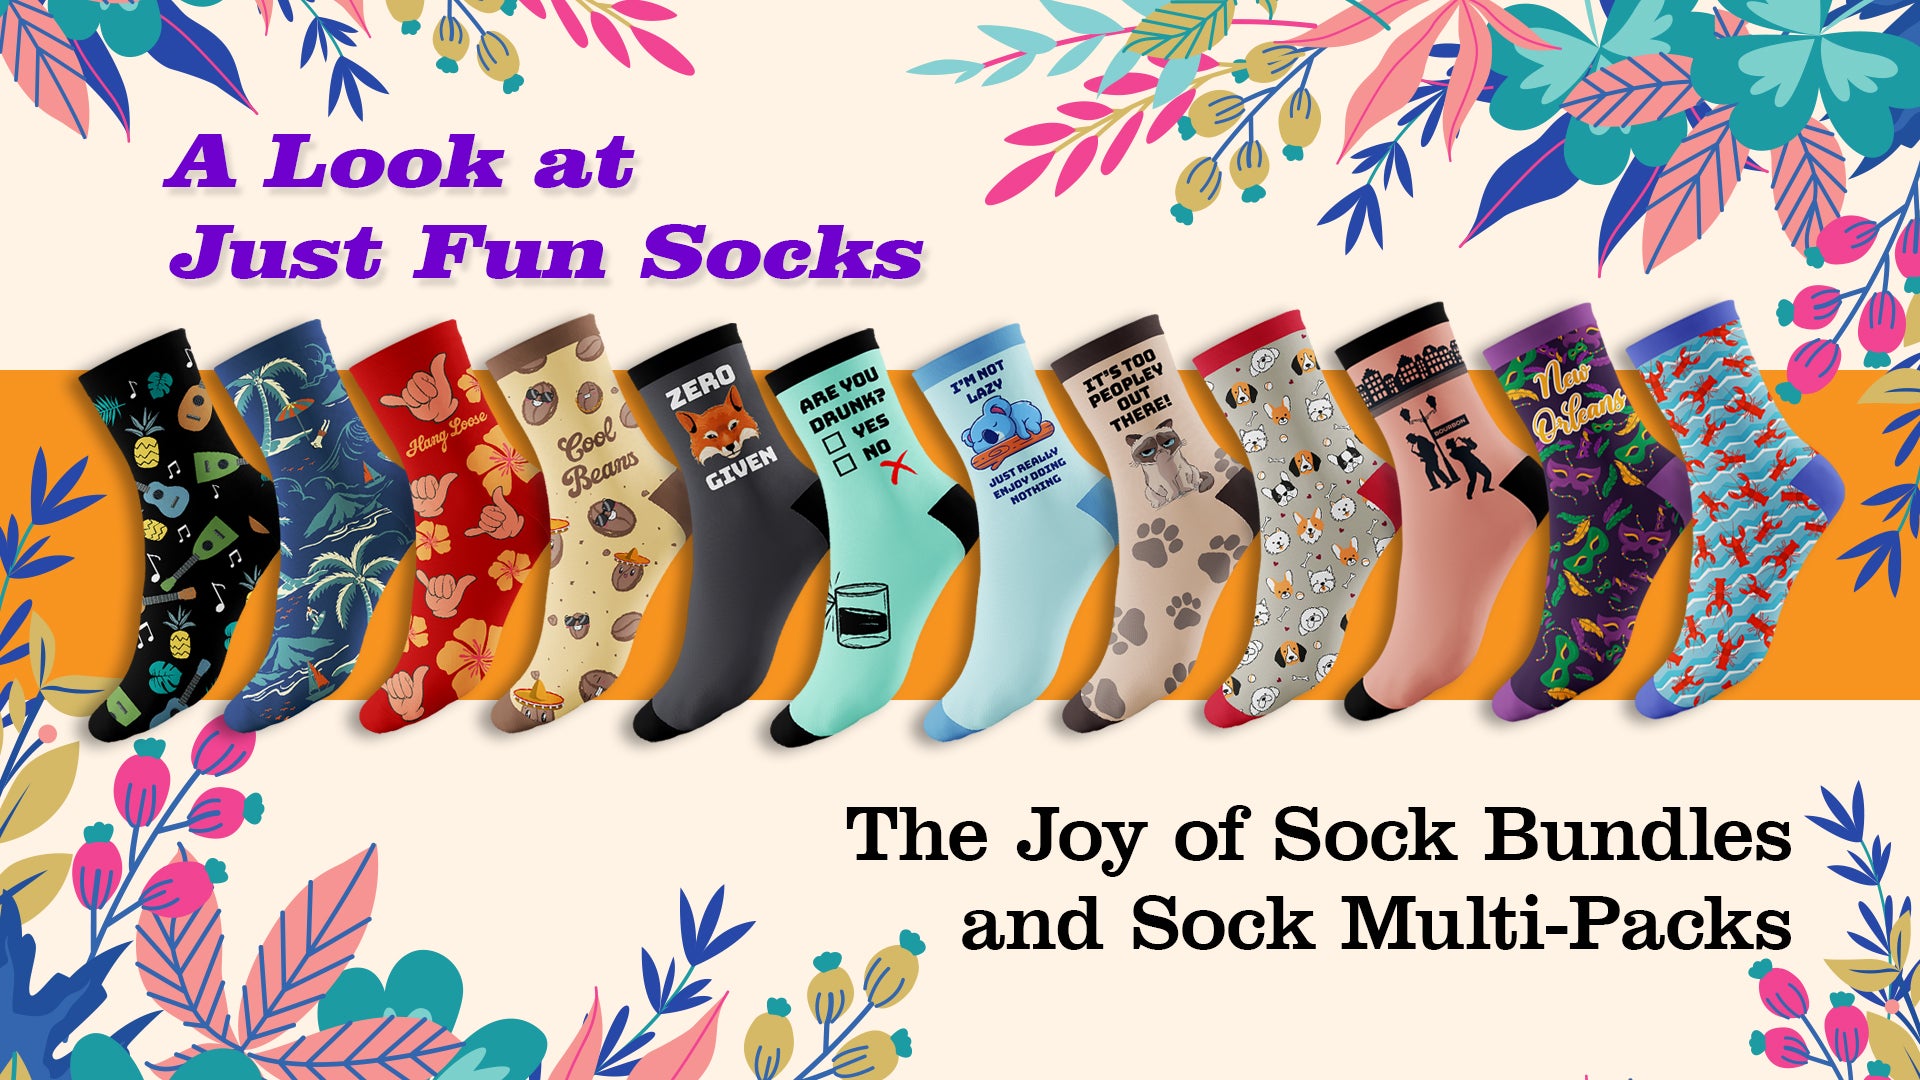 The Joy of Sock Bundles and Sock Multi-Packs: A Look at Just Fun Socks